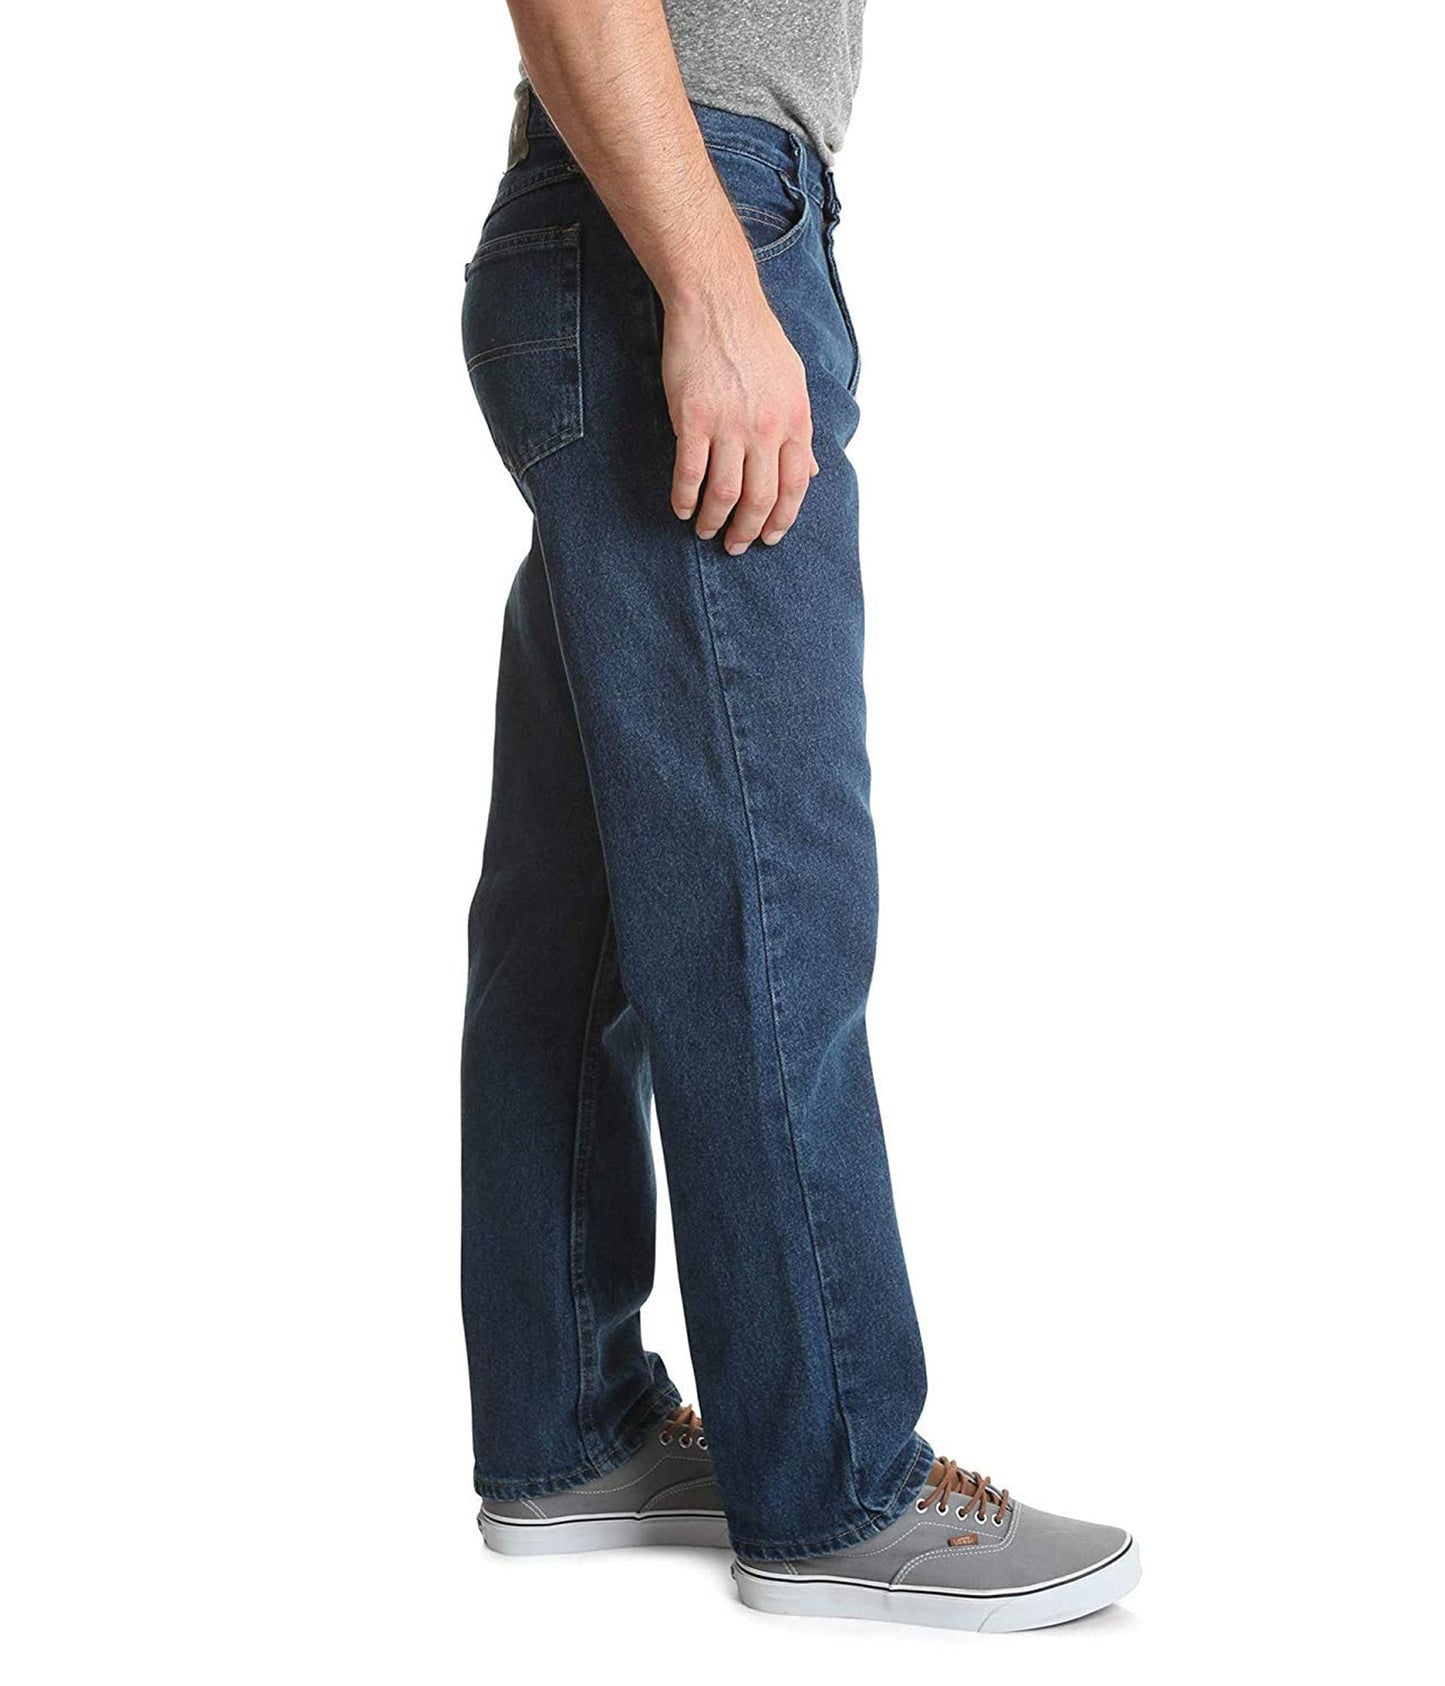 Wrangler Authentics Men's Classic 5-Pocket Relaxed Fit Cotton Jean, Dark Stonewash, 35W x 34L